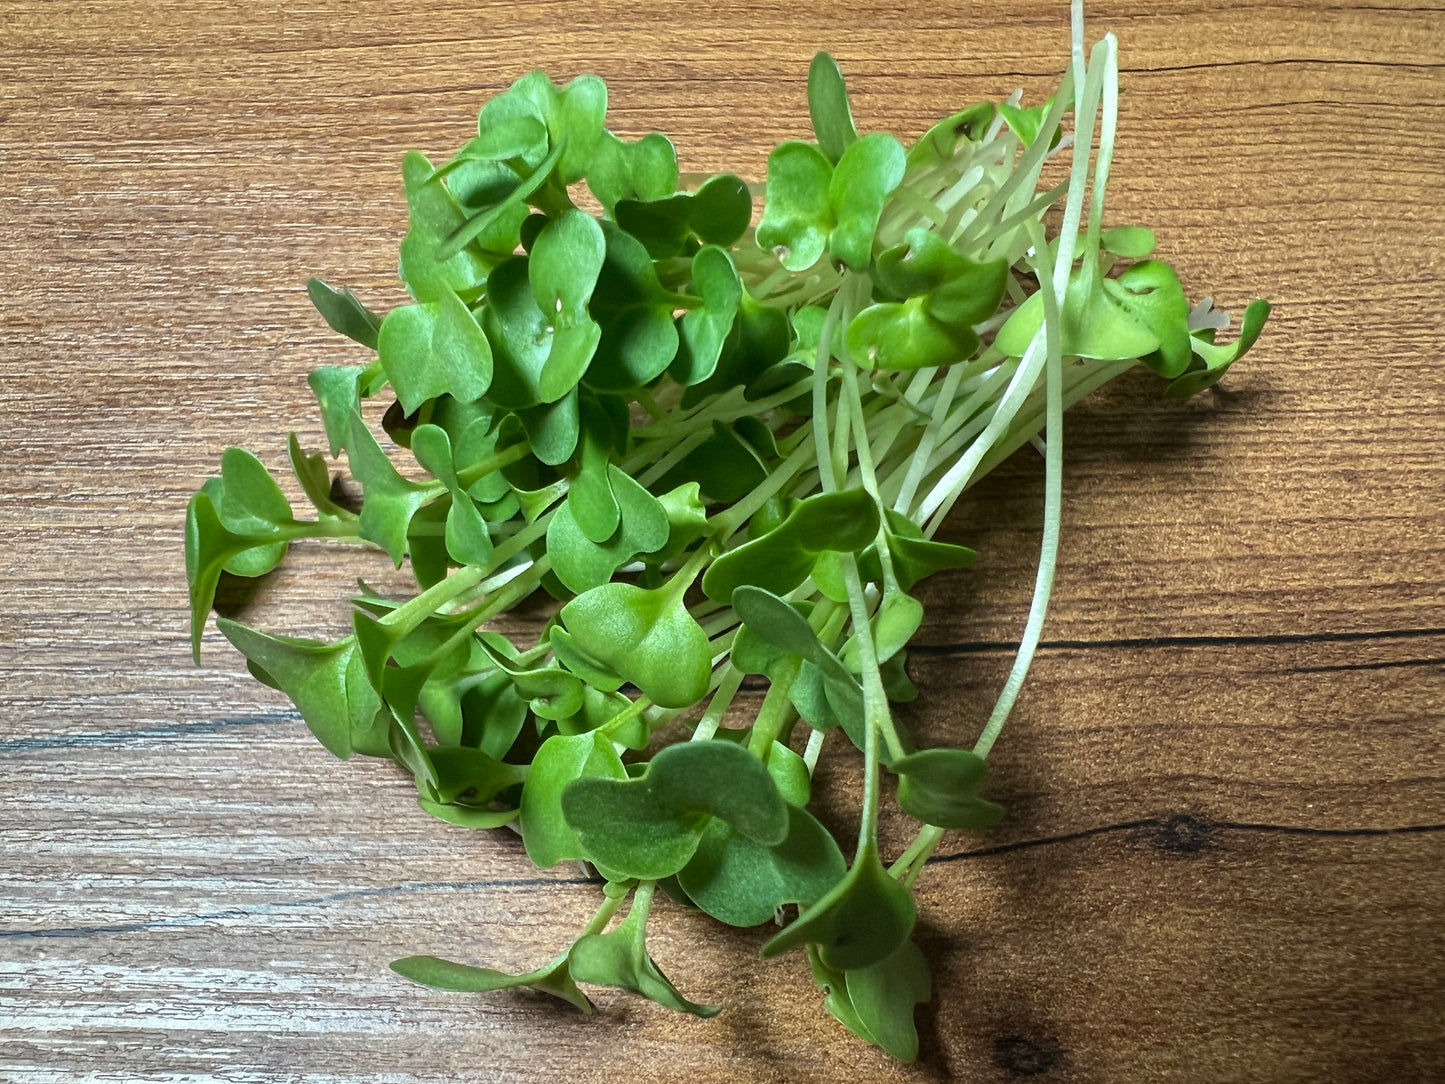 Broccoli (Waltham 29) Microgreen - 5" Flat